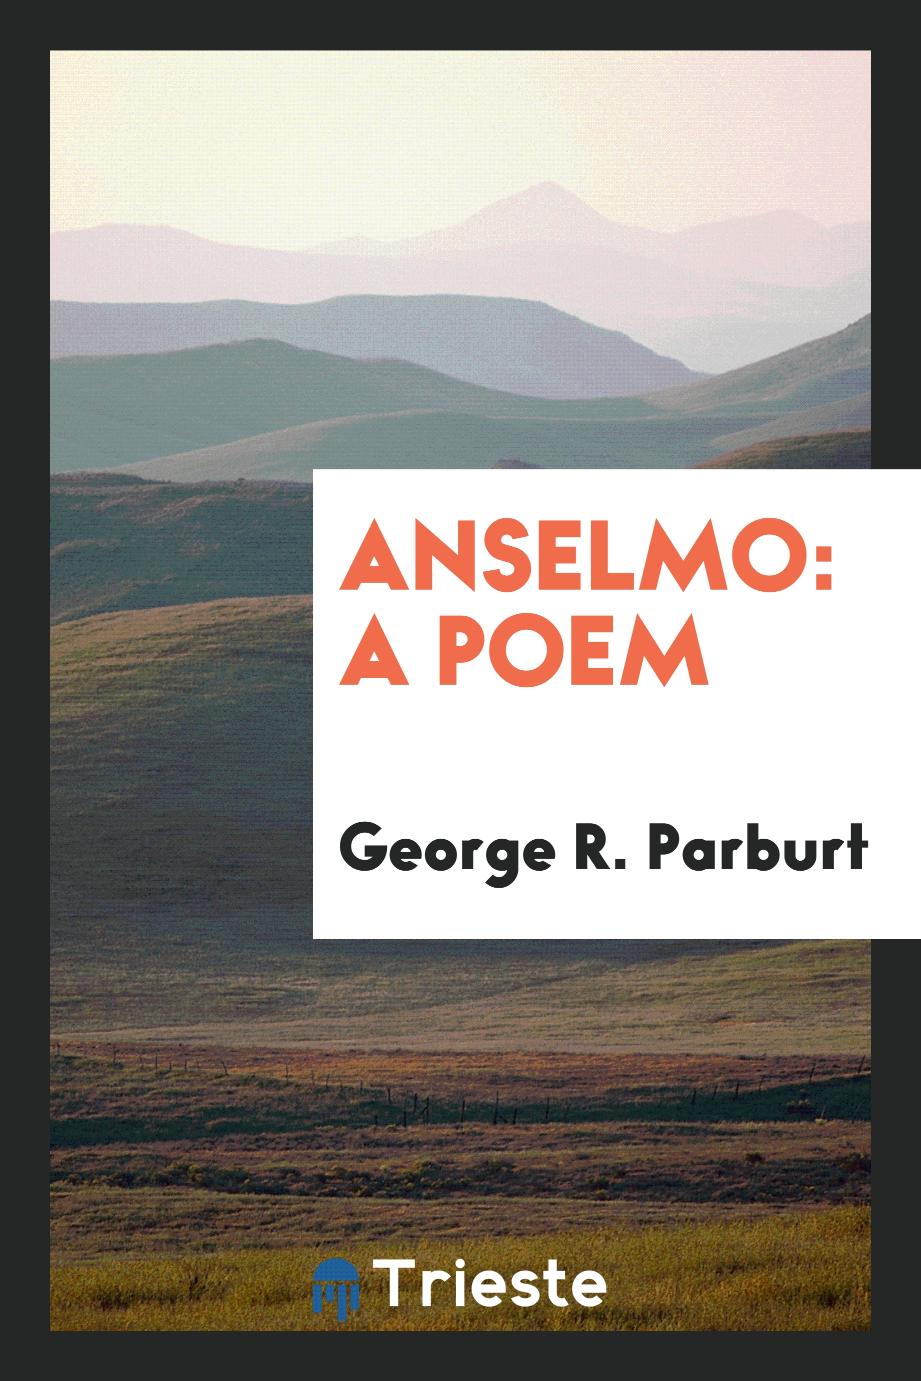 Anselmo: A Poem